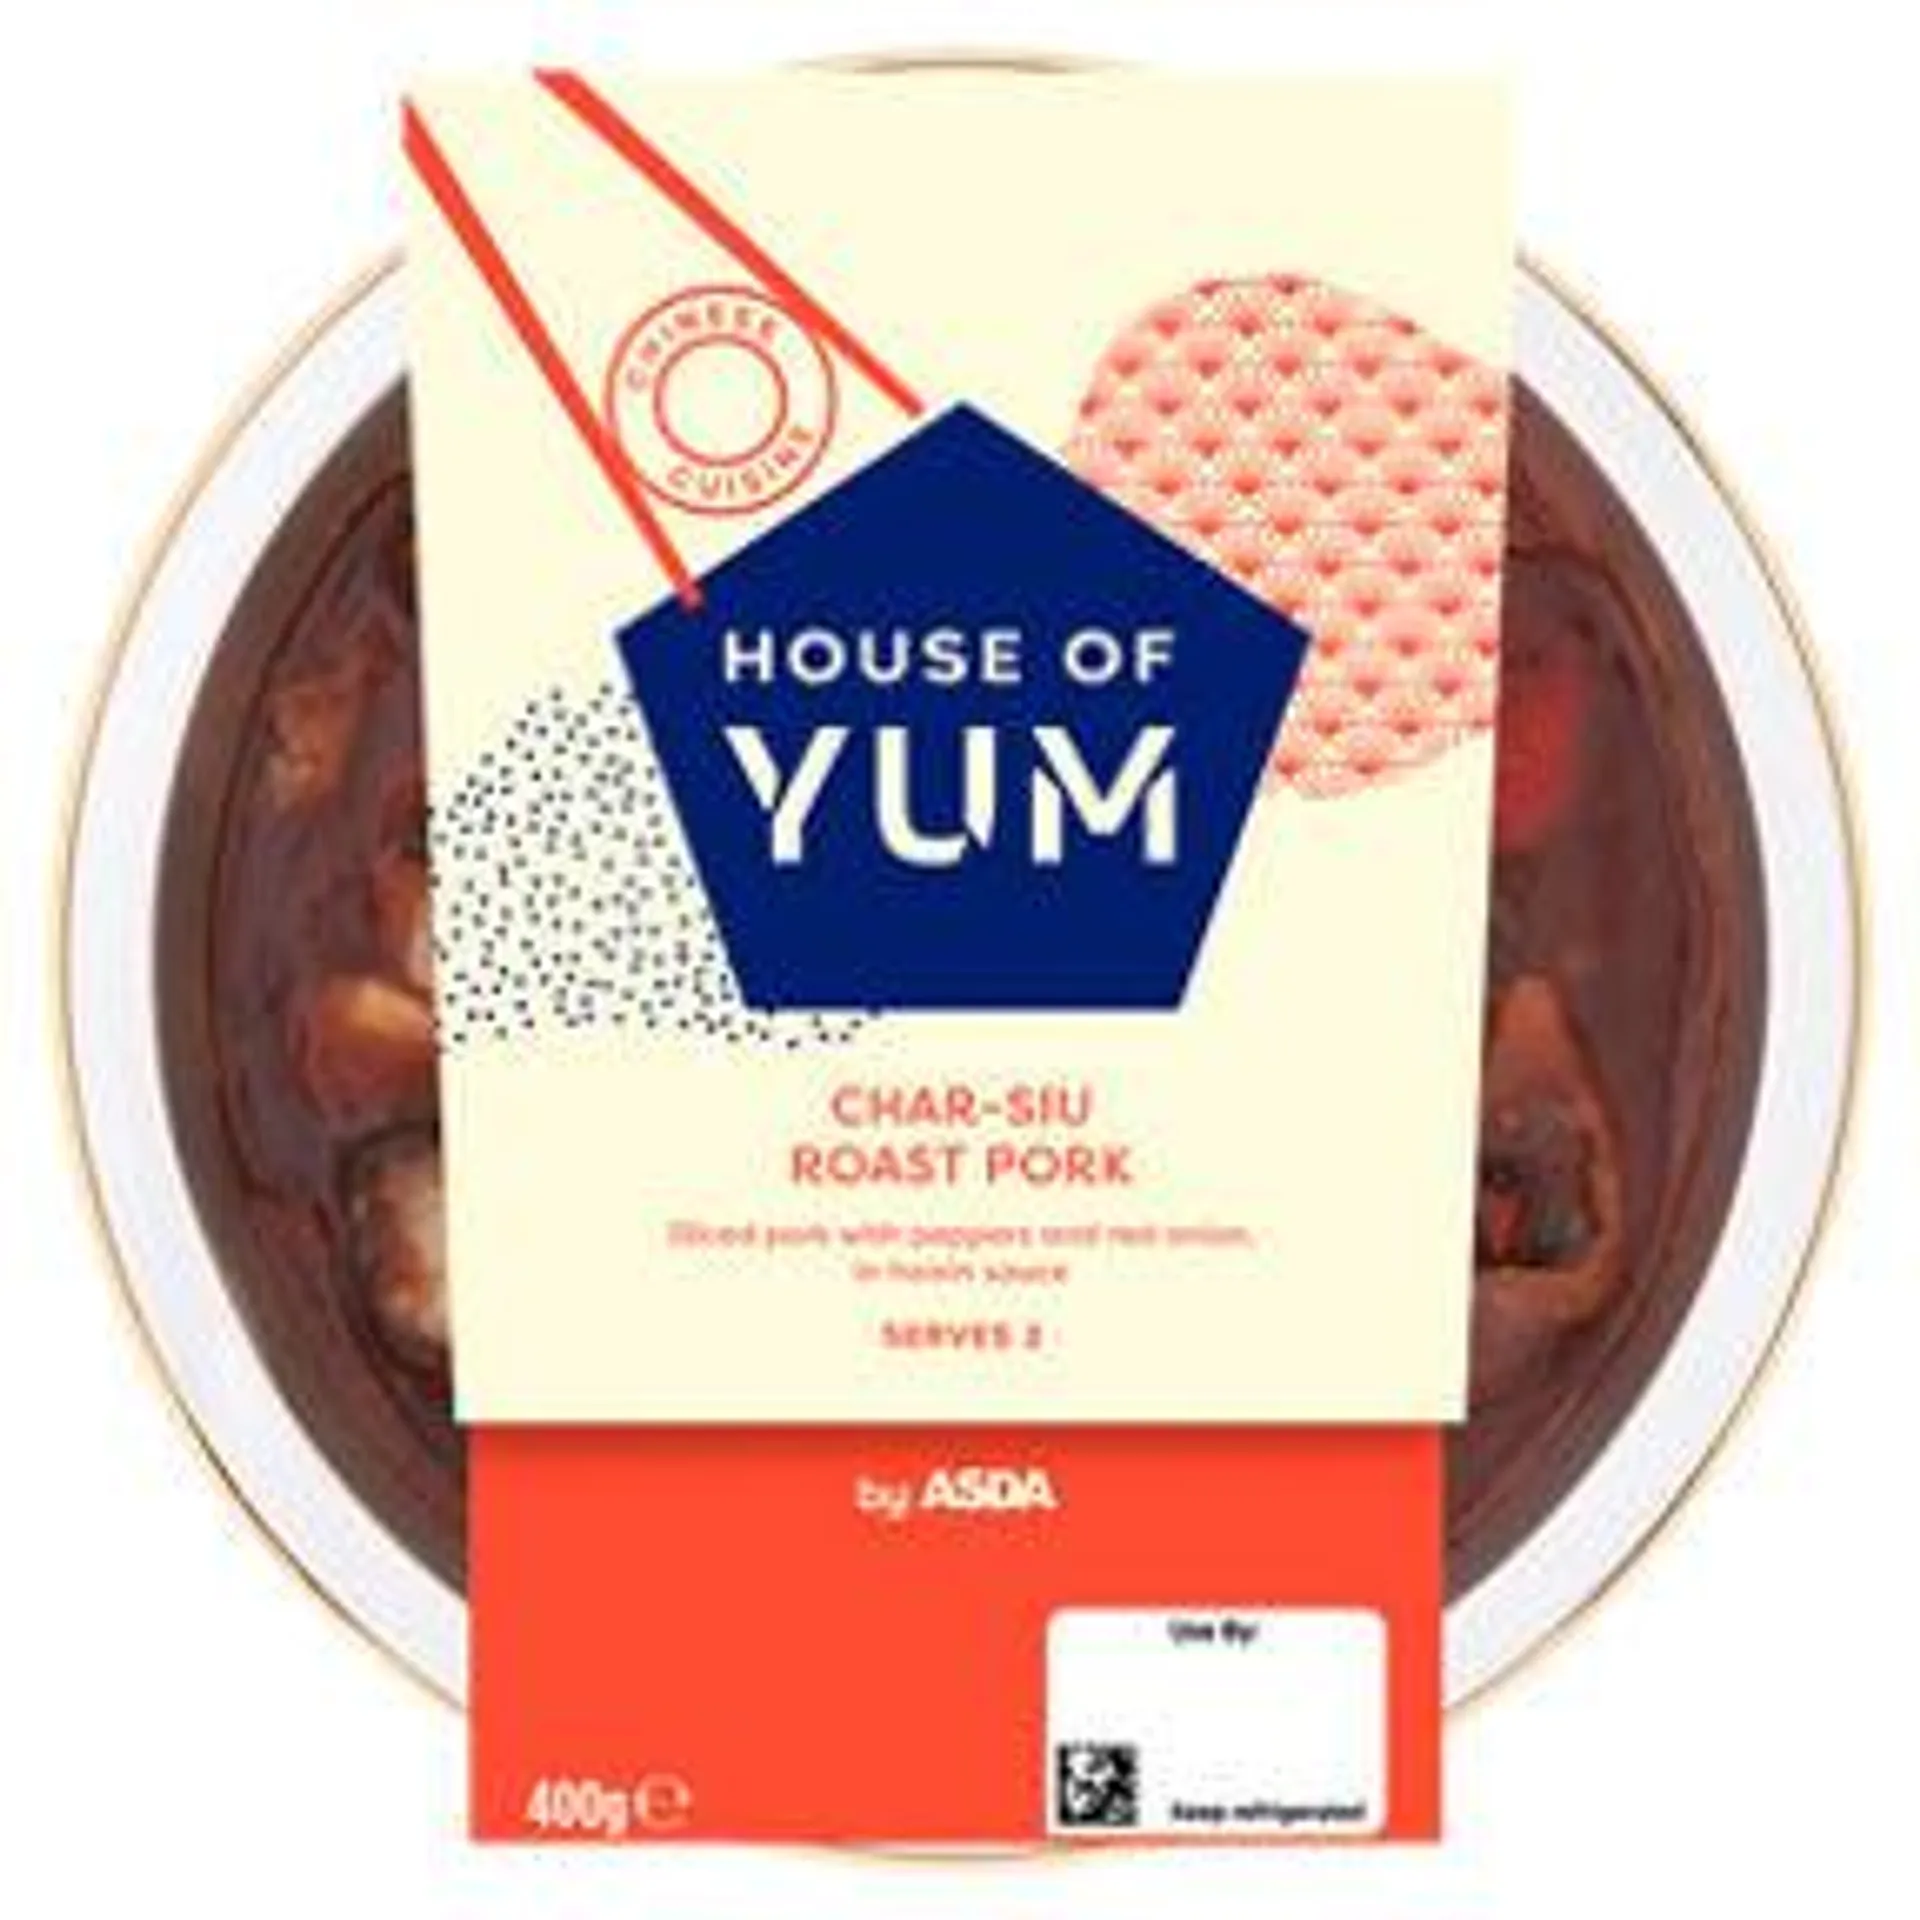 House of Yum by ASDA Char-Siu Roast Pork 400g